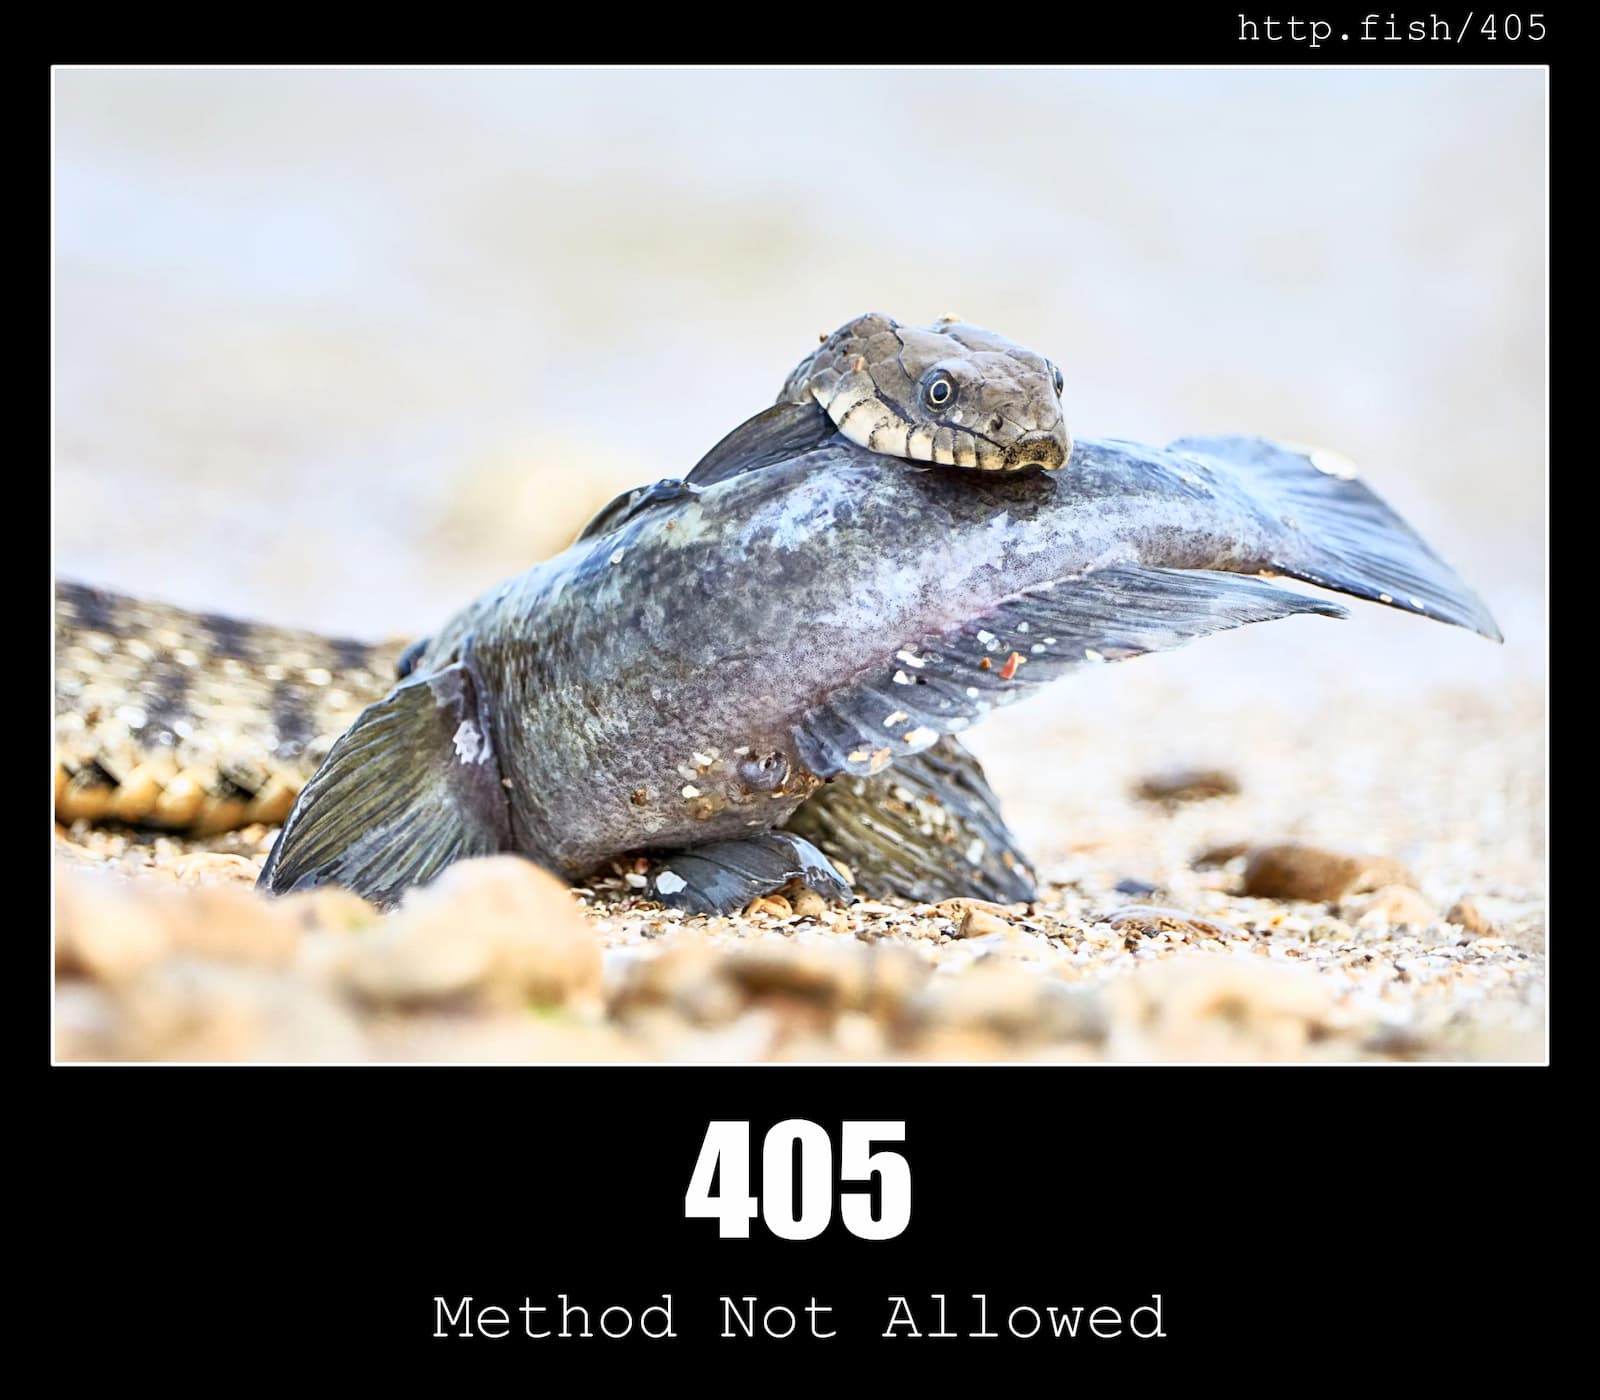 HTTP Status Code 405 Method Not Allowed & Fish